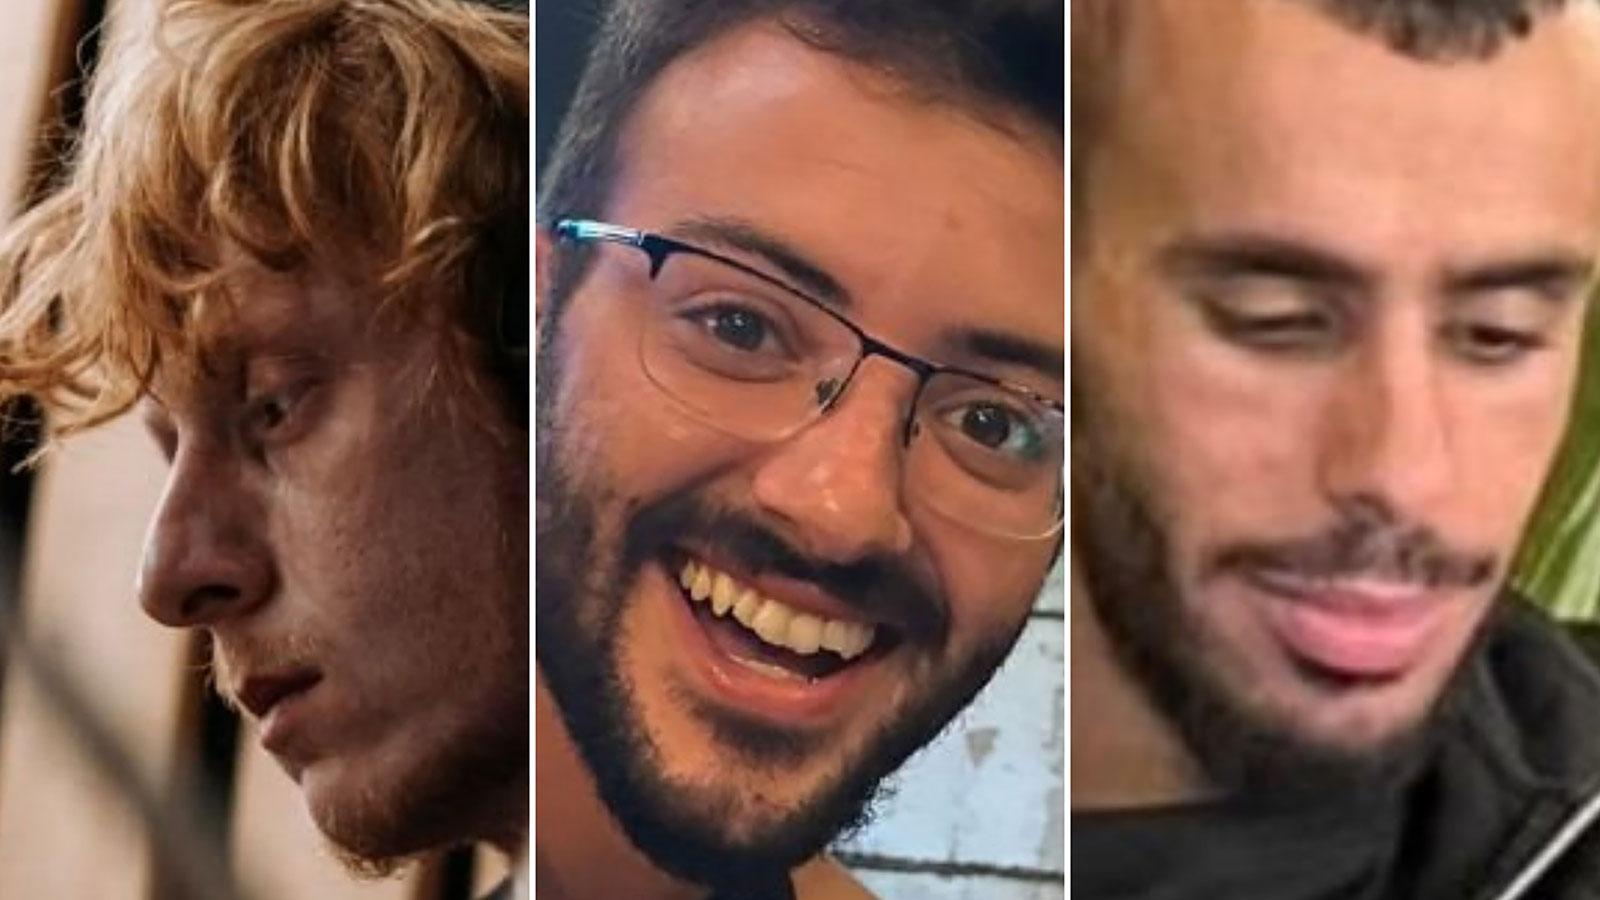 The three hostages killed are identified as, from left to right, Yotam Haim, Alon Shimriz, and Samer Talalka